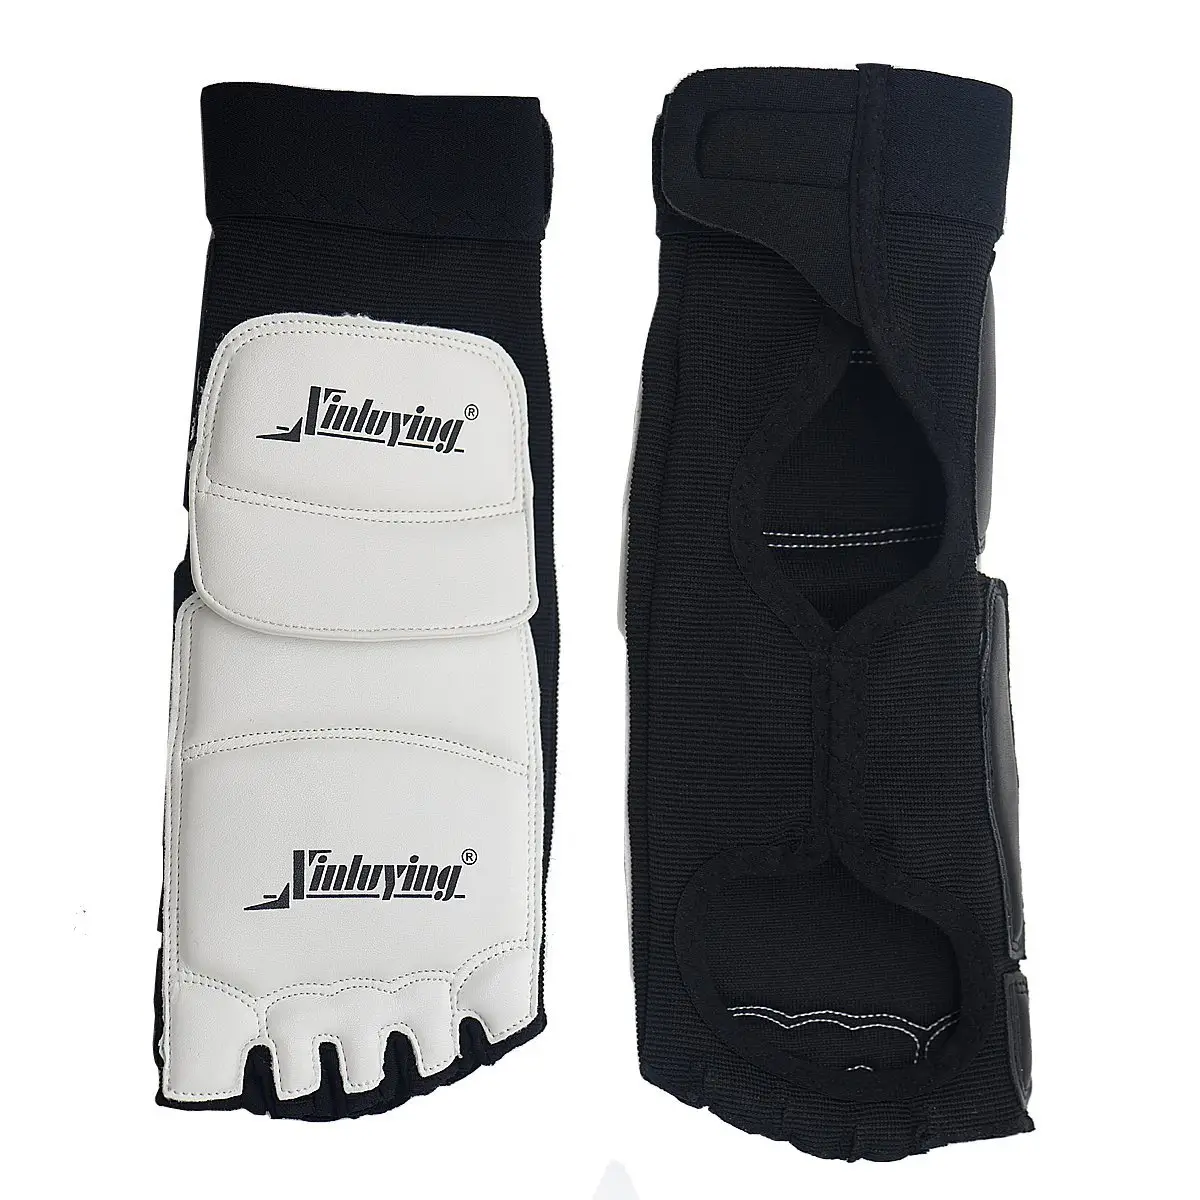 durable breathable martial art protective gear foot protector taekwondo foot guard